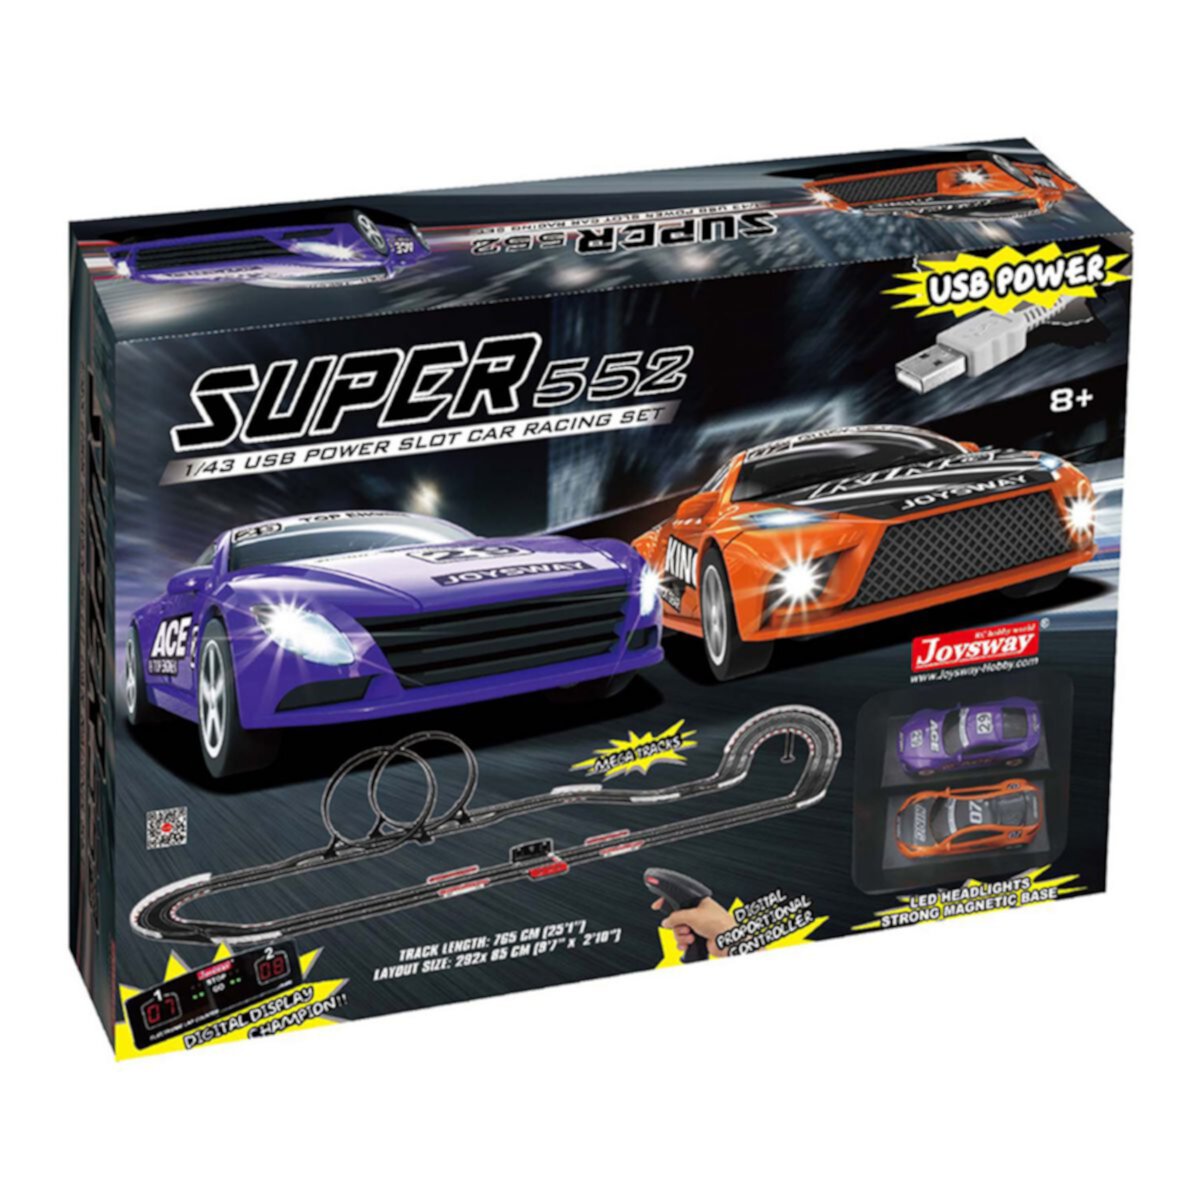 JOYSWAY Superior 552 USB Power Slot Car Racing набор JOYSWAY